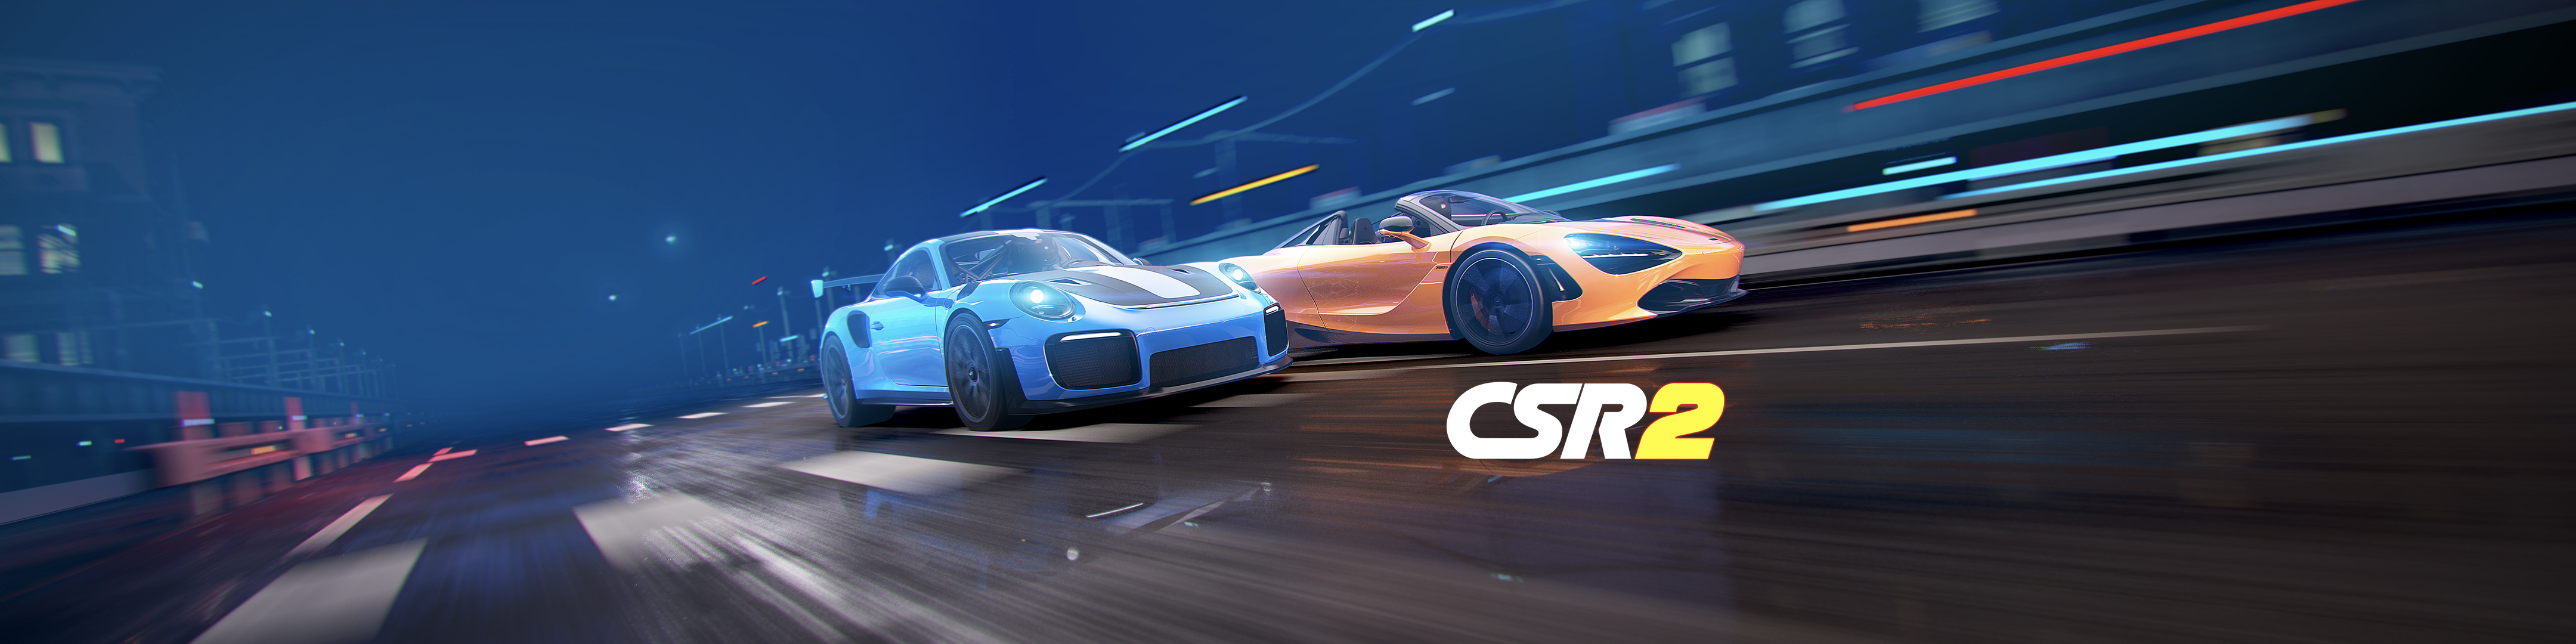 Csr Racing 2 1 Racing Games Overview Apple App Store Us - roblox vehicle simulator mclaren p1 max drag racing